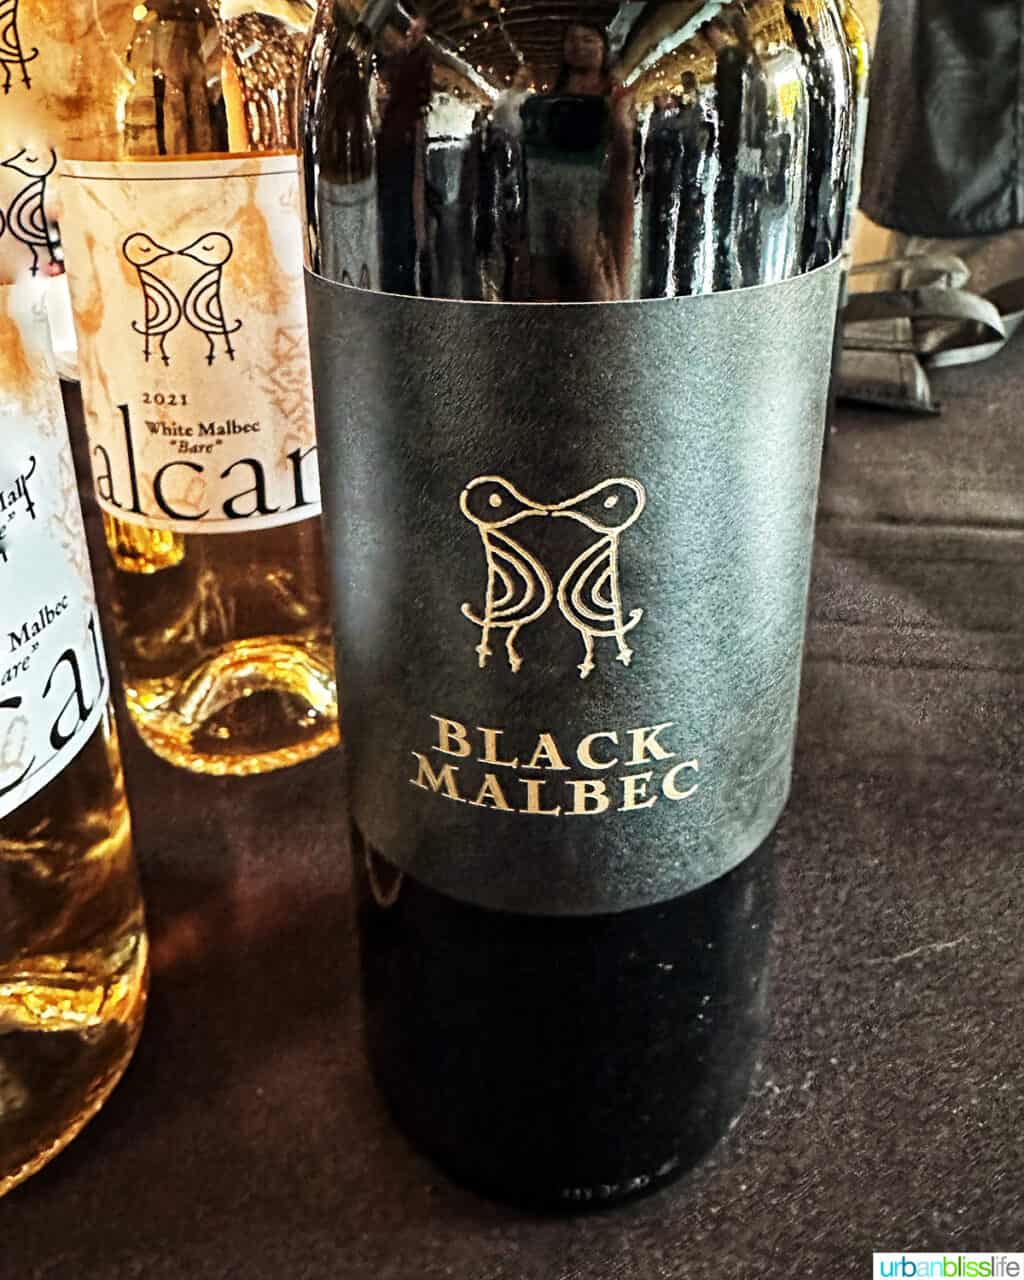 Bottle of Black Malbec by Valcan Cellars, an oregon winery.